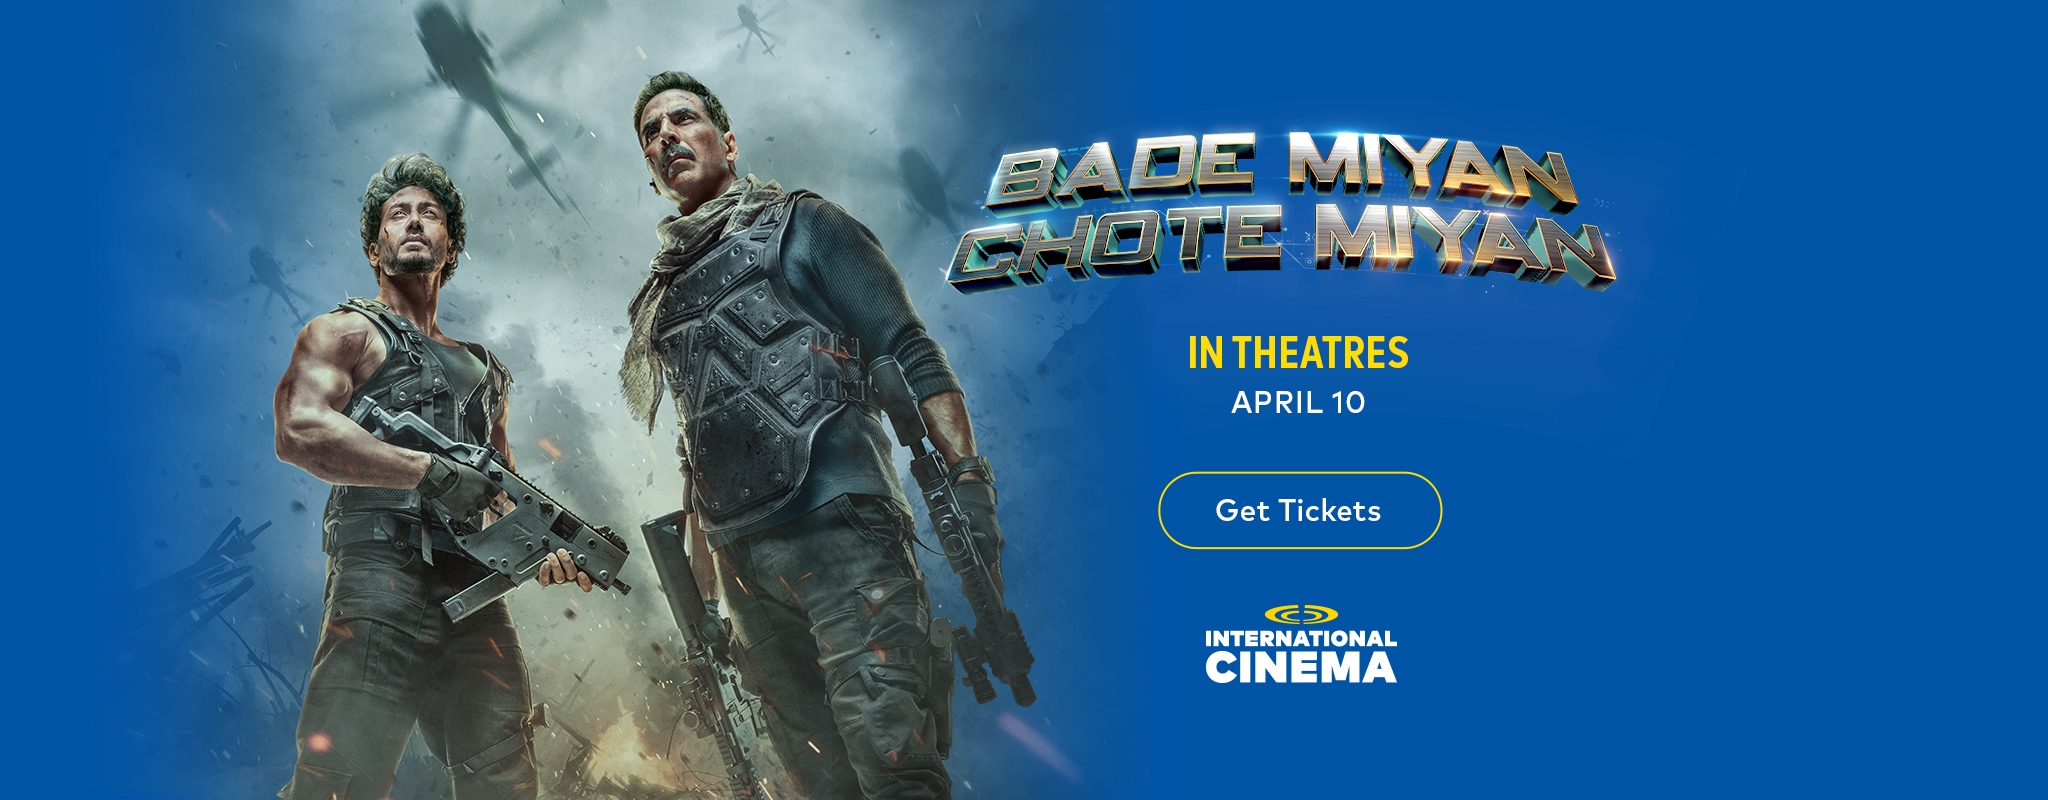 Bade Miyan Chote Miyan - In Theatres April 10 - Get Tickets